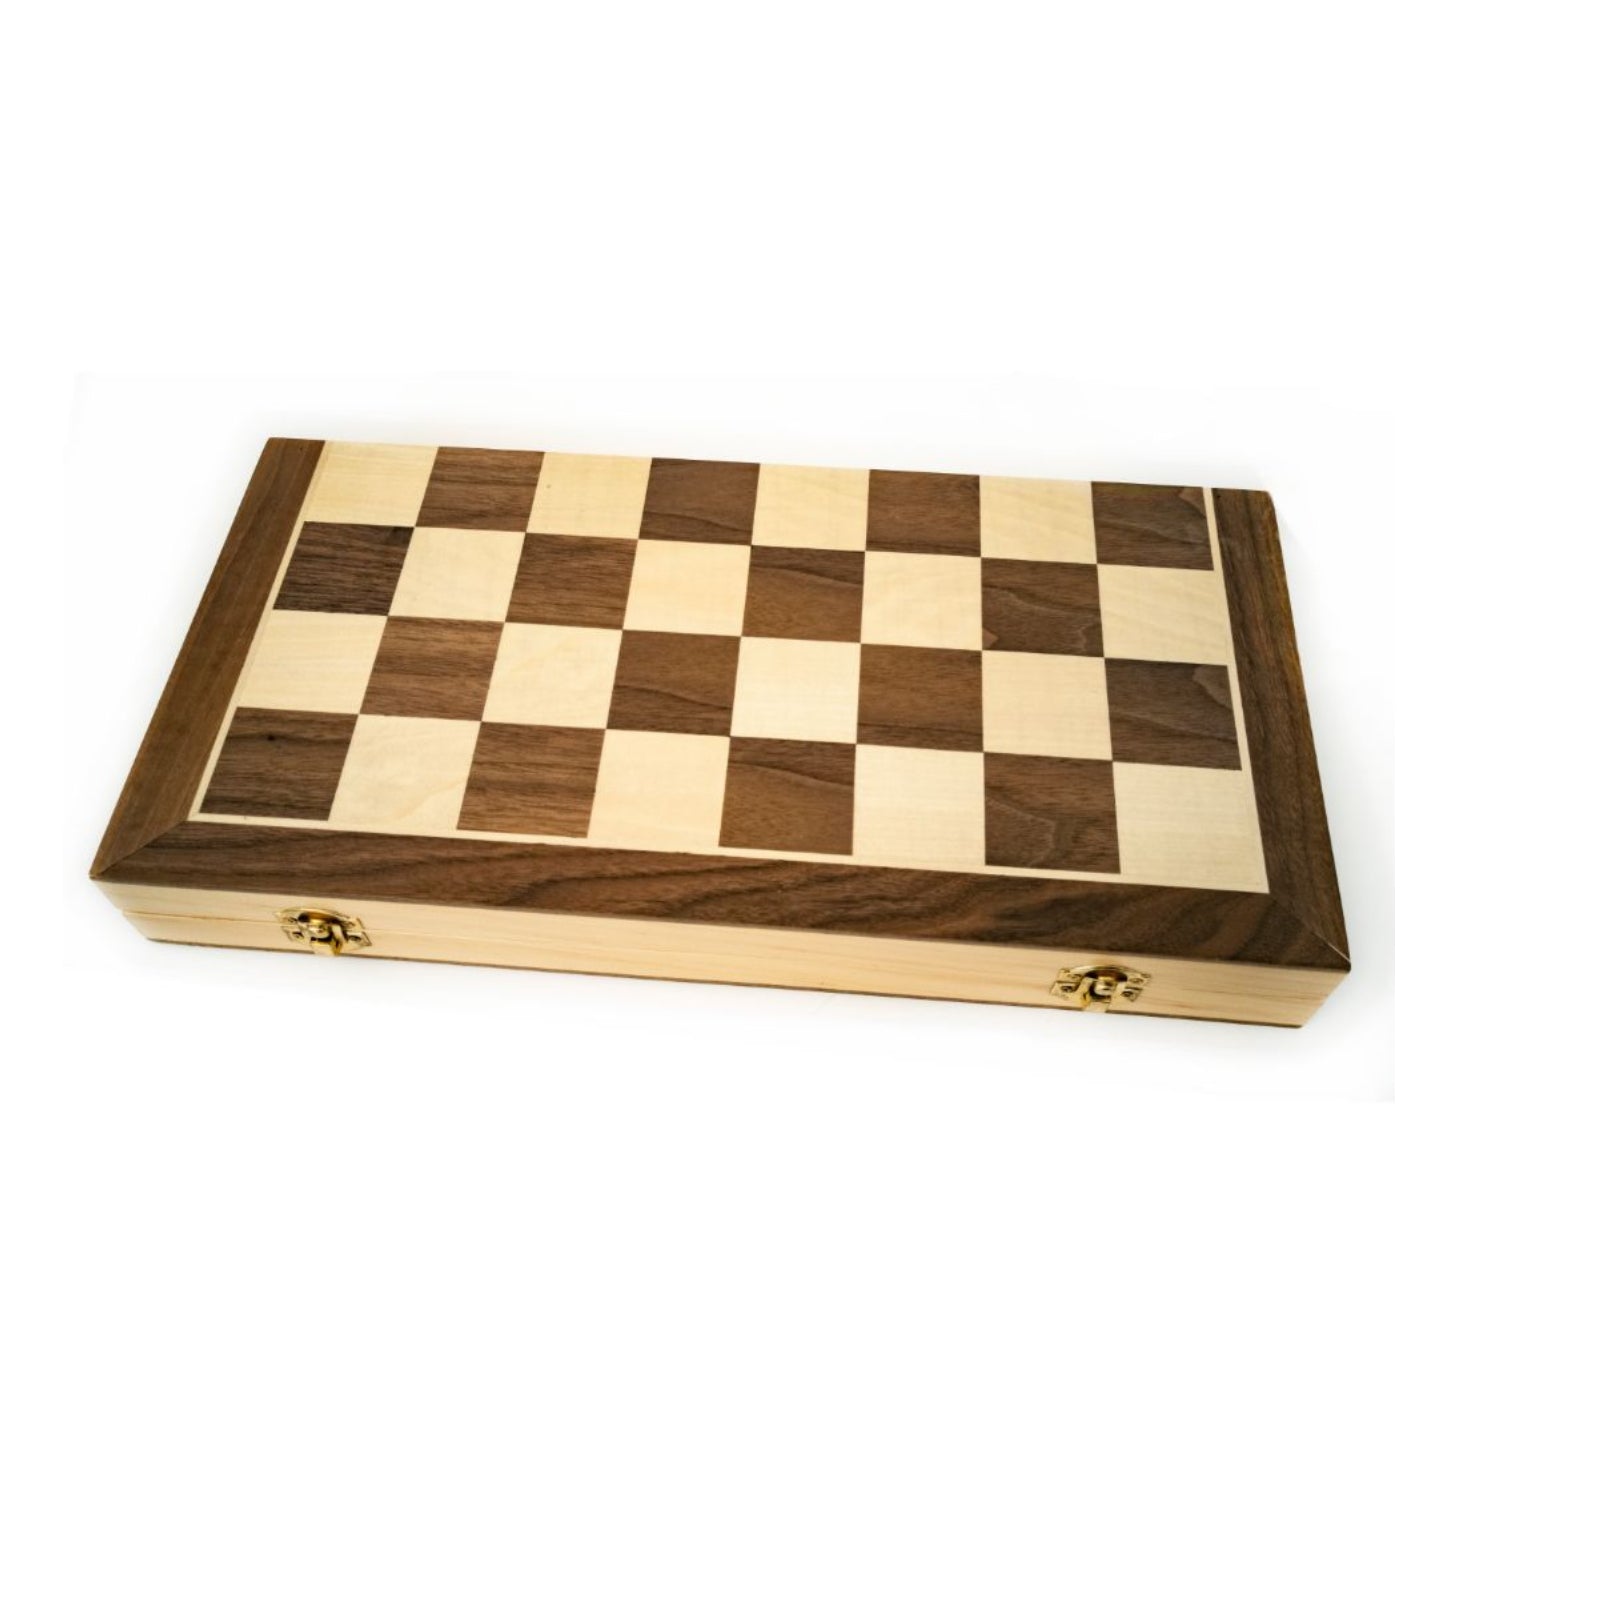 Wooden Folding Chess Checkers Backgammon Set 40cm